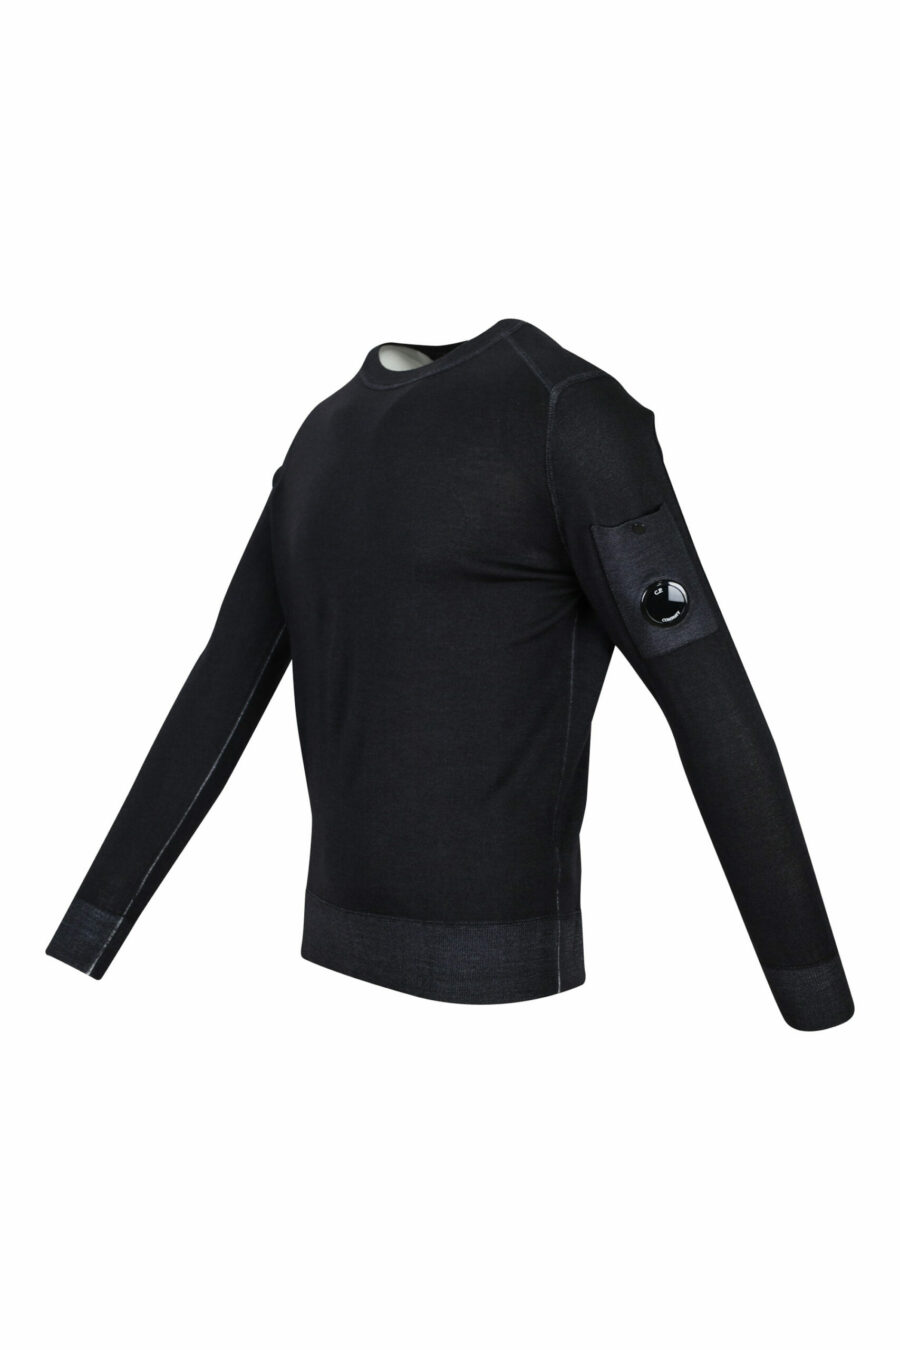 Black sweatshirt with side lens logo - 7620943583458 1 scaled